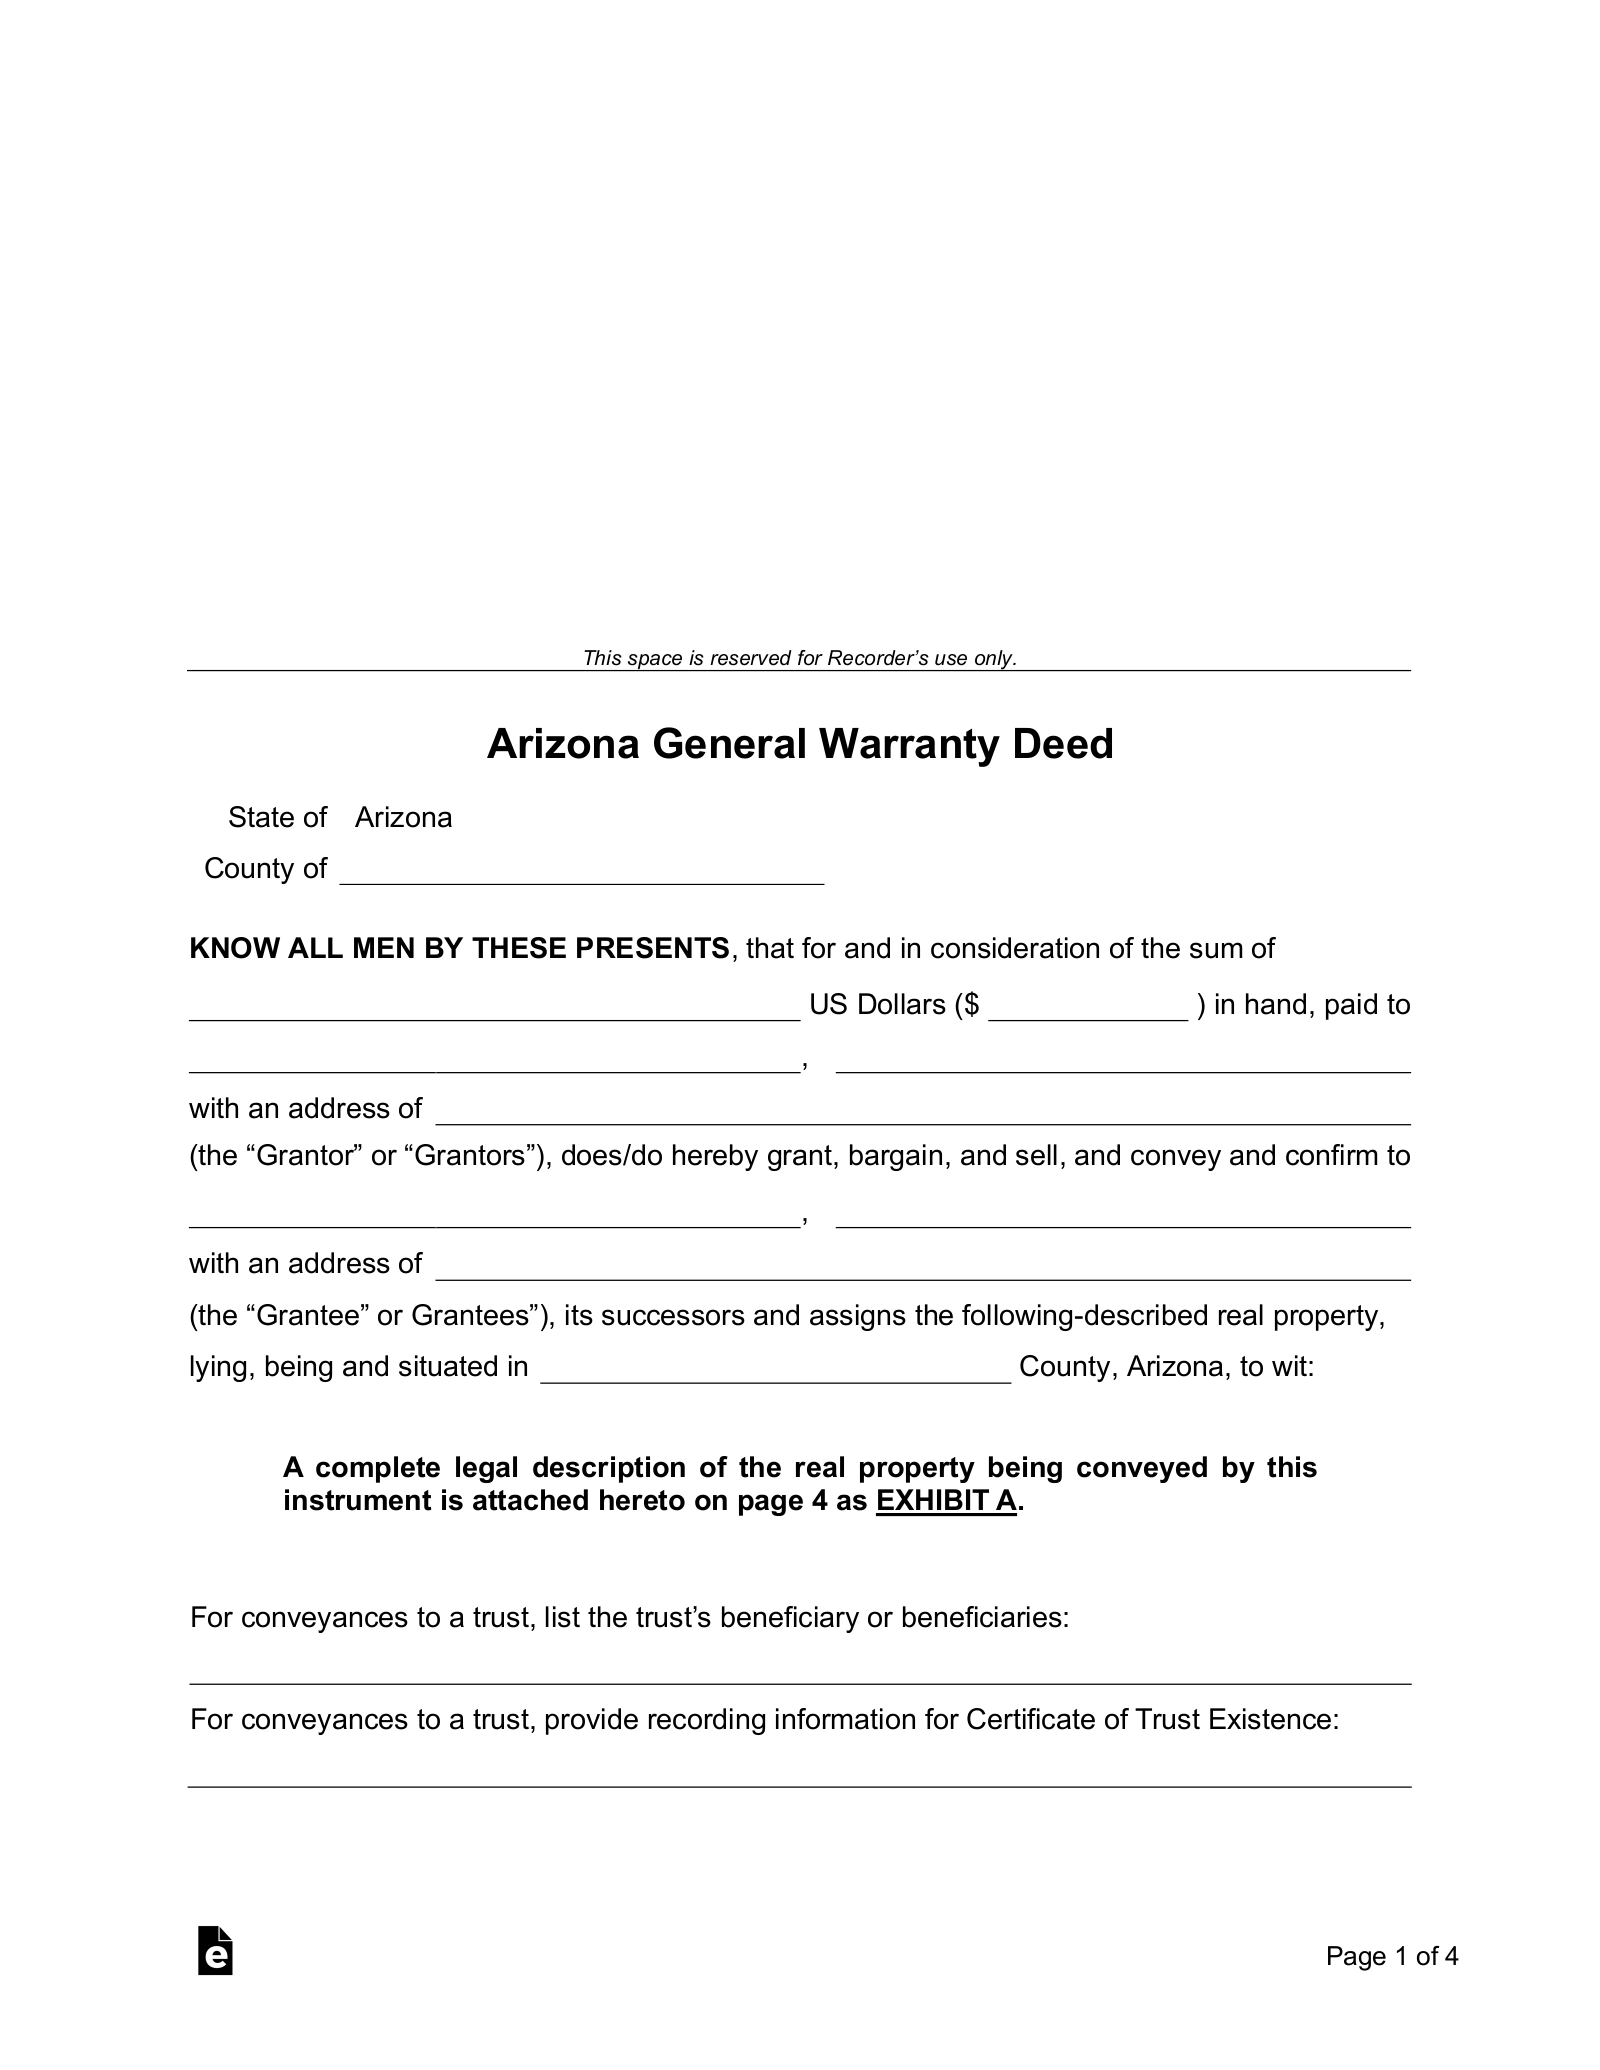 Arizona General Warranty Deed Form